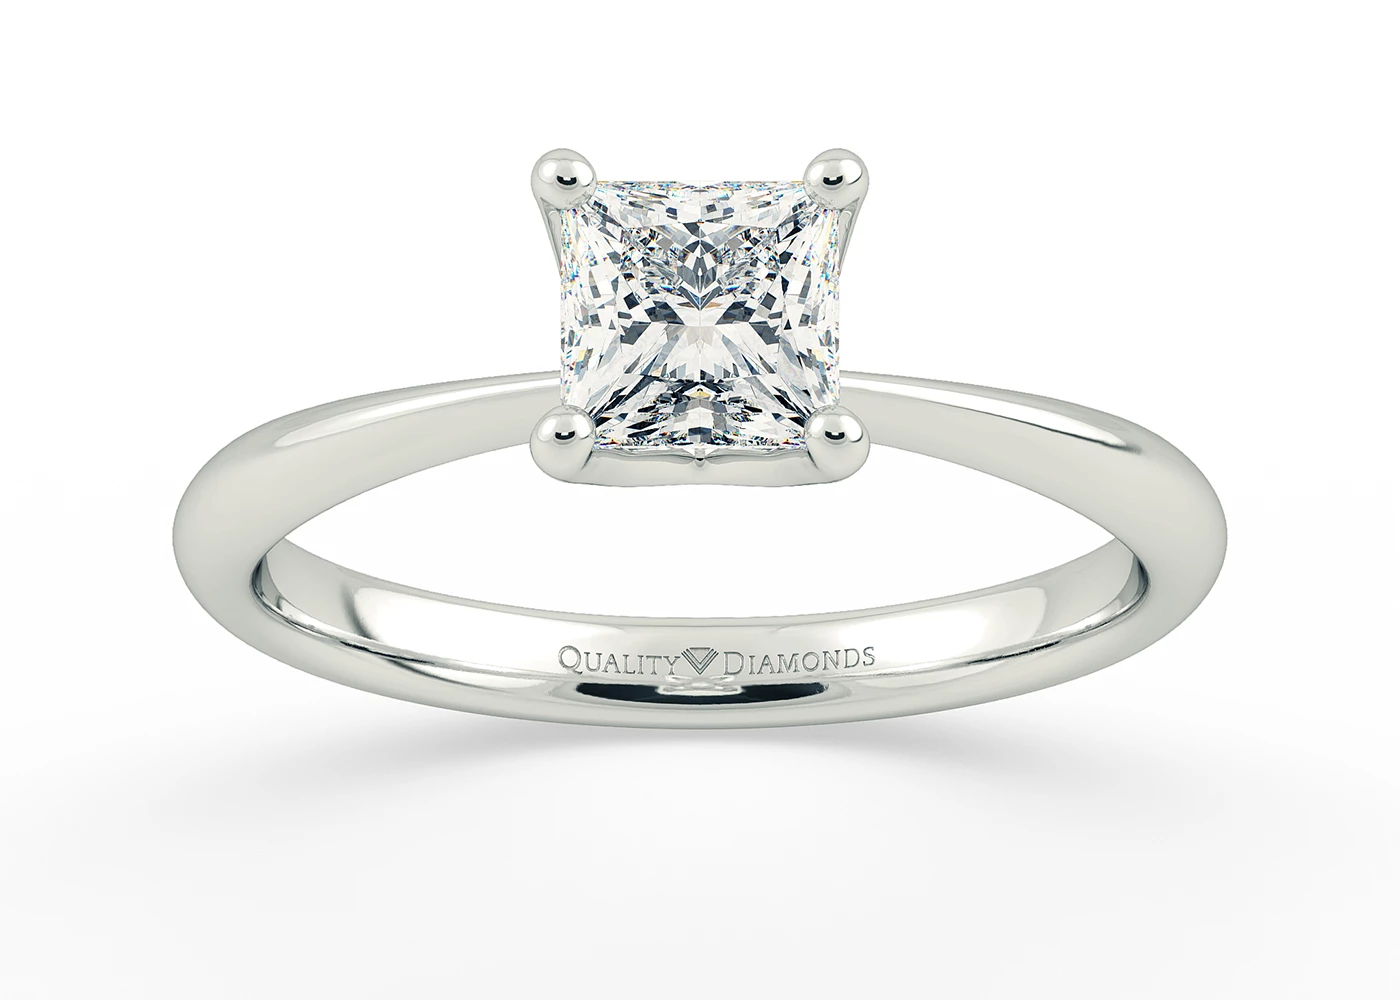 Princess Amorette Diamond Ring in 18K White Gold